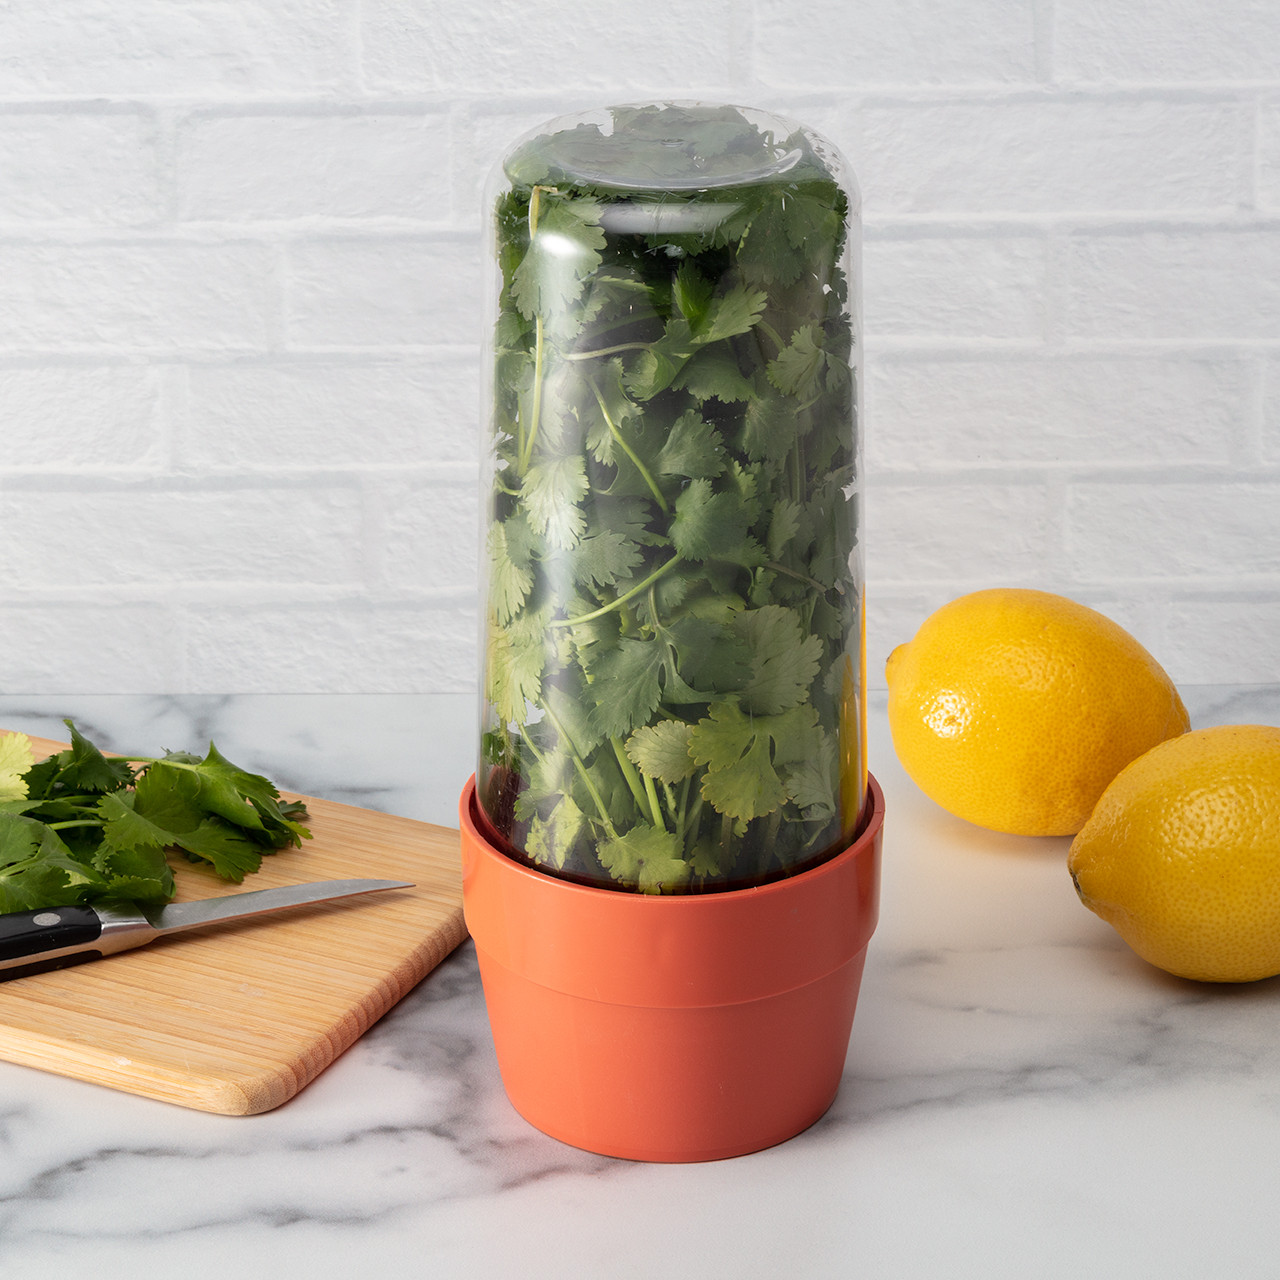 Refrigerator Herb Crisper Saver Pod Container Vegetable Preserving